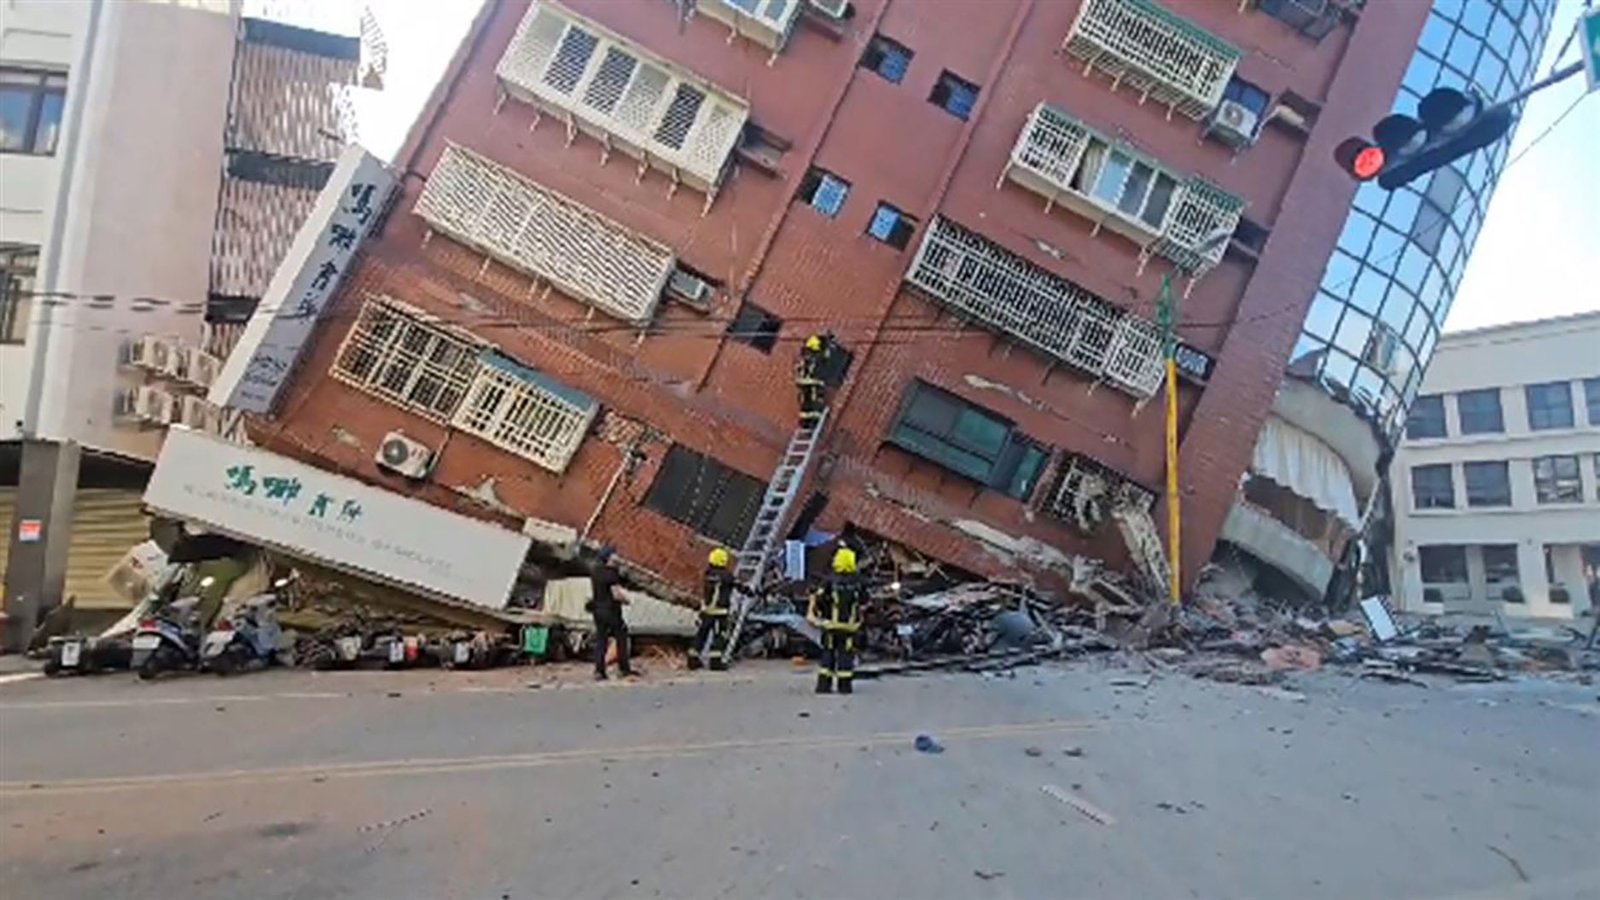 Earthquake hits Taiwan: At least 4 killed & 711 hurt as huge 7.7 magnitude quake downs buildings & triggers landslides